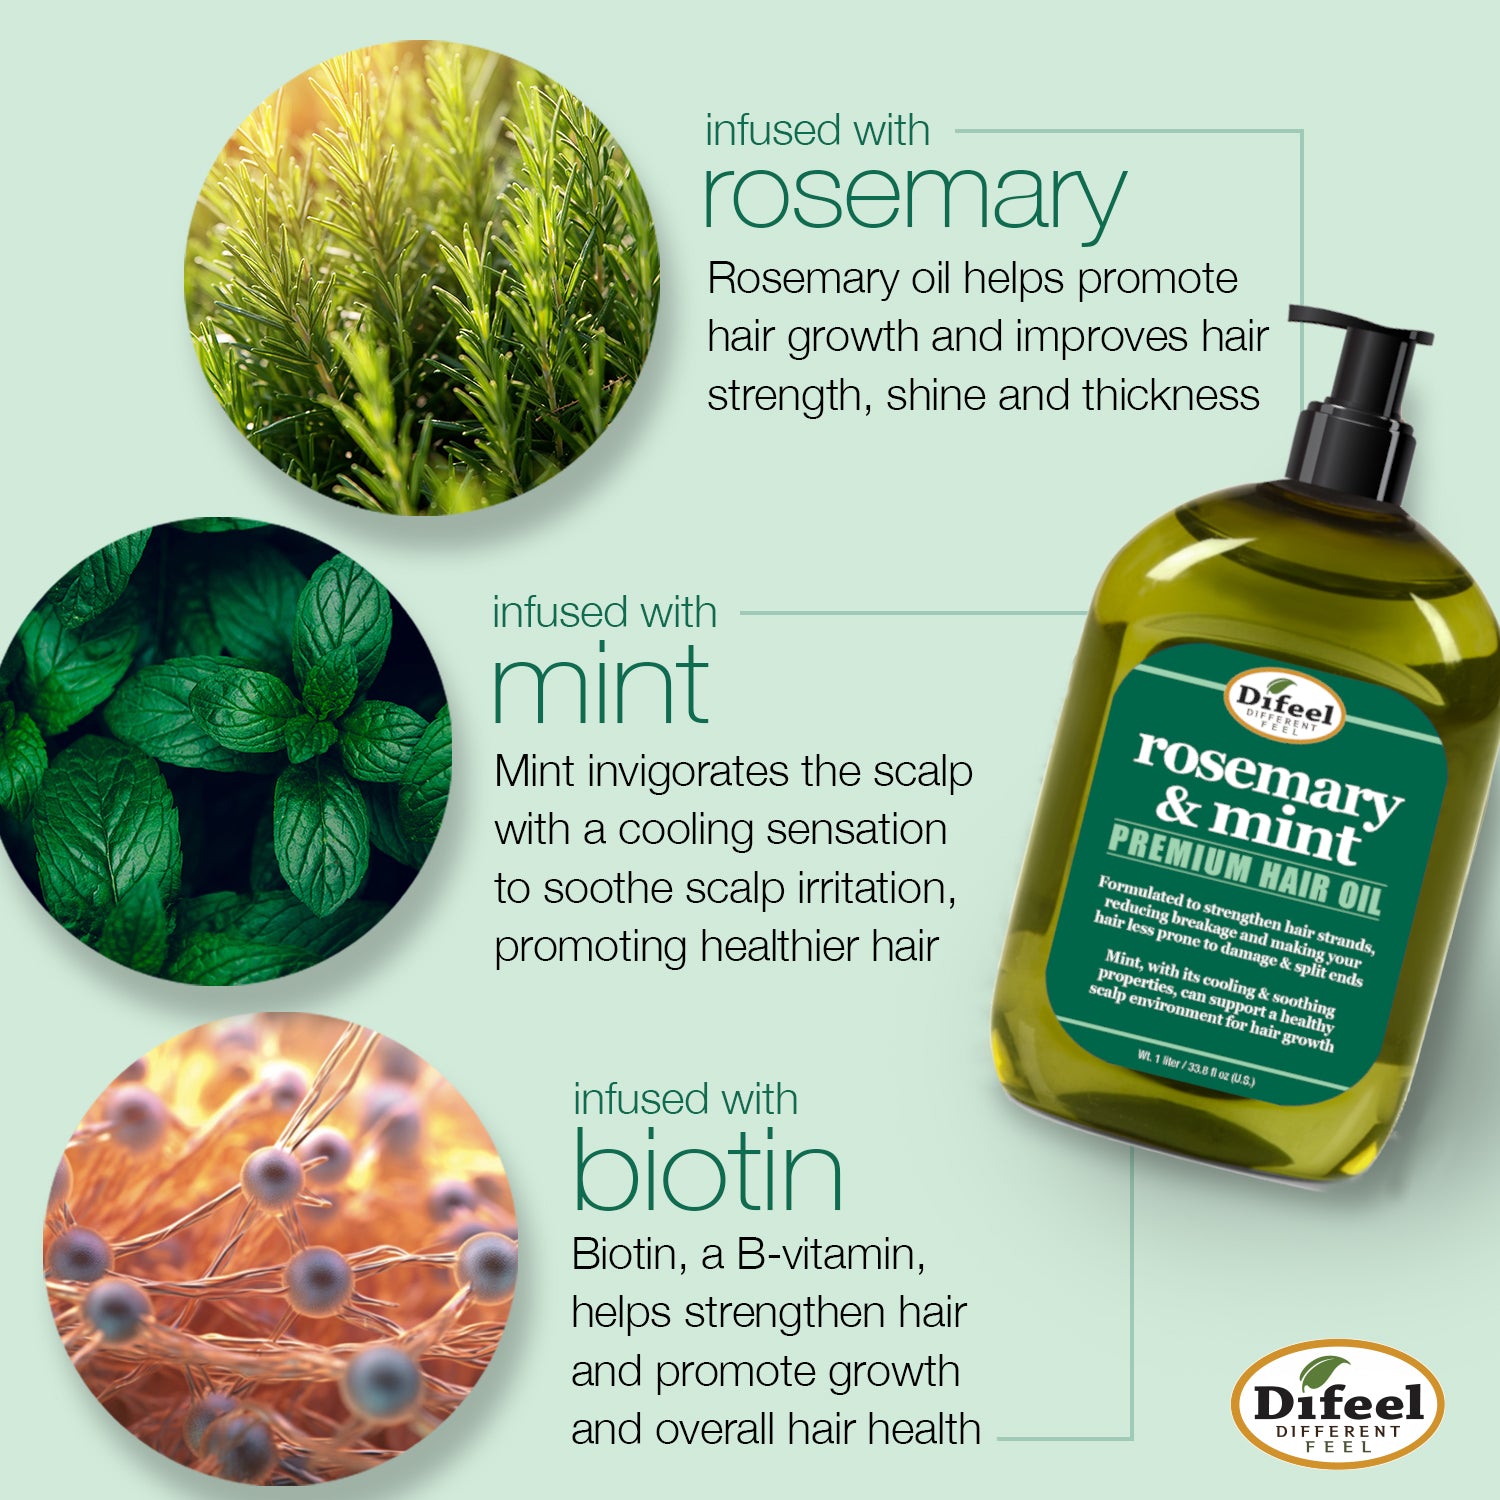 Difeel Rosemary and Mint Premium Hair Oil - Large 33.8 oz.